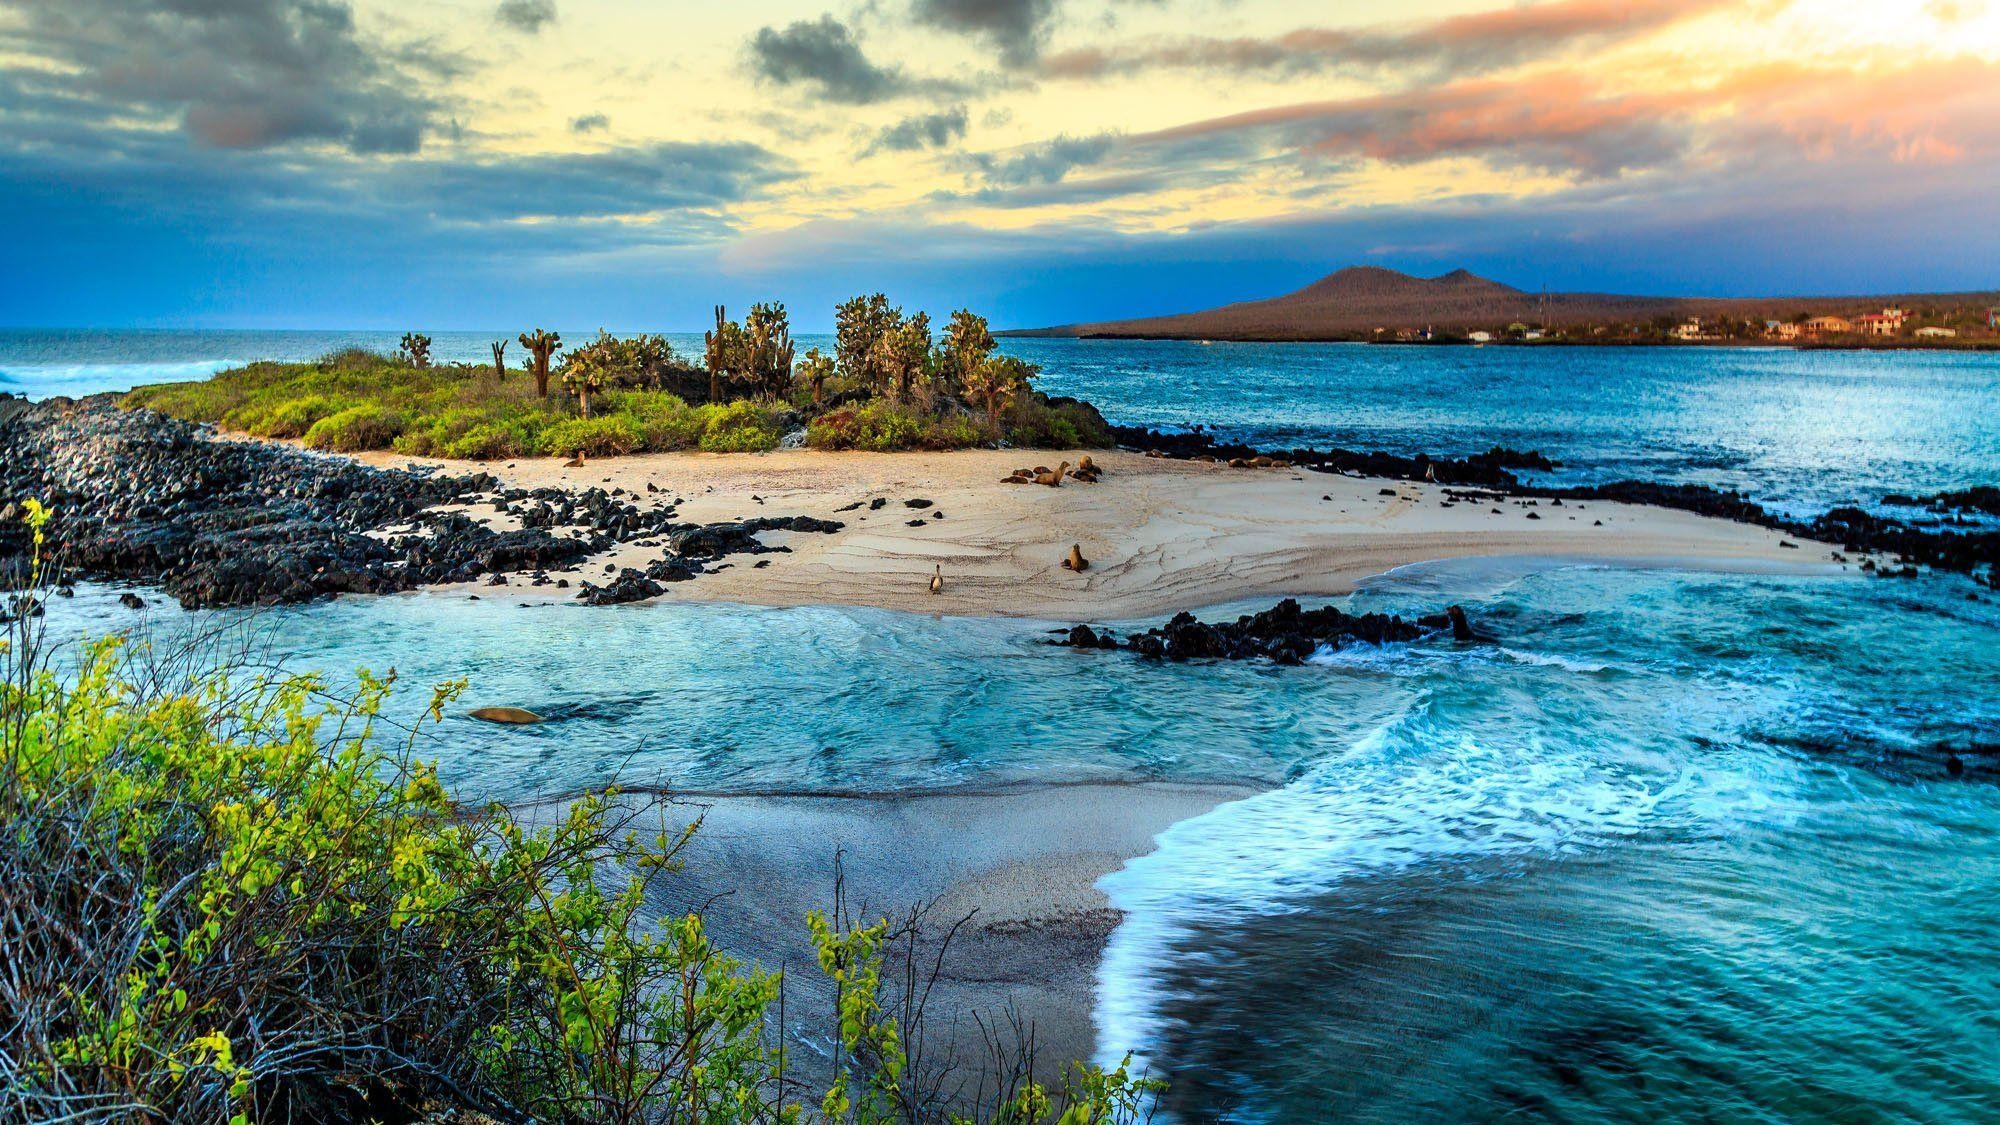 Ecuador: Galapagos Islands, Water resources, Natural landscape. 2000x1130 HD Wallpaper.